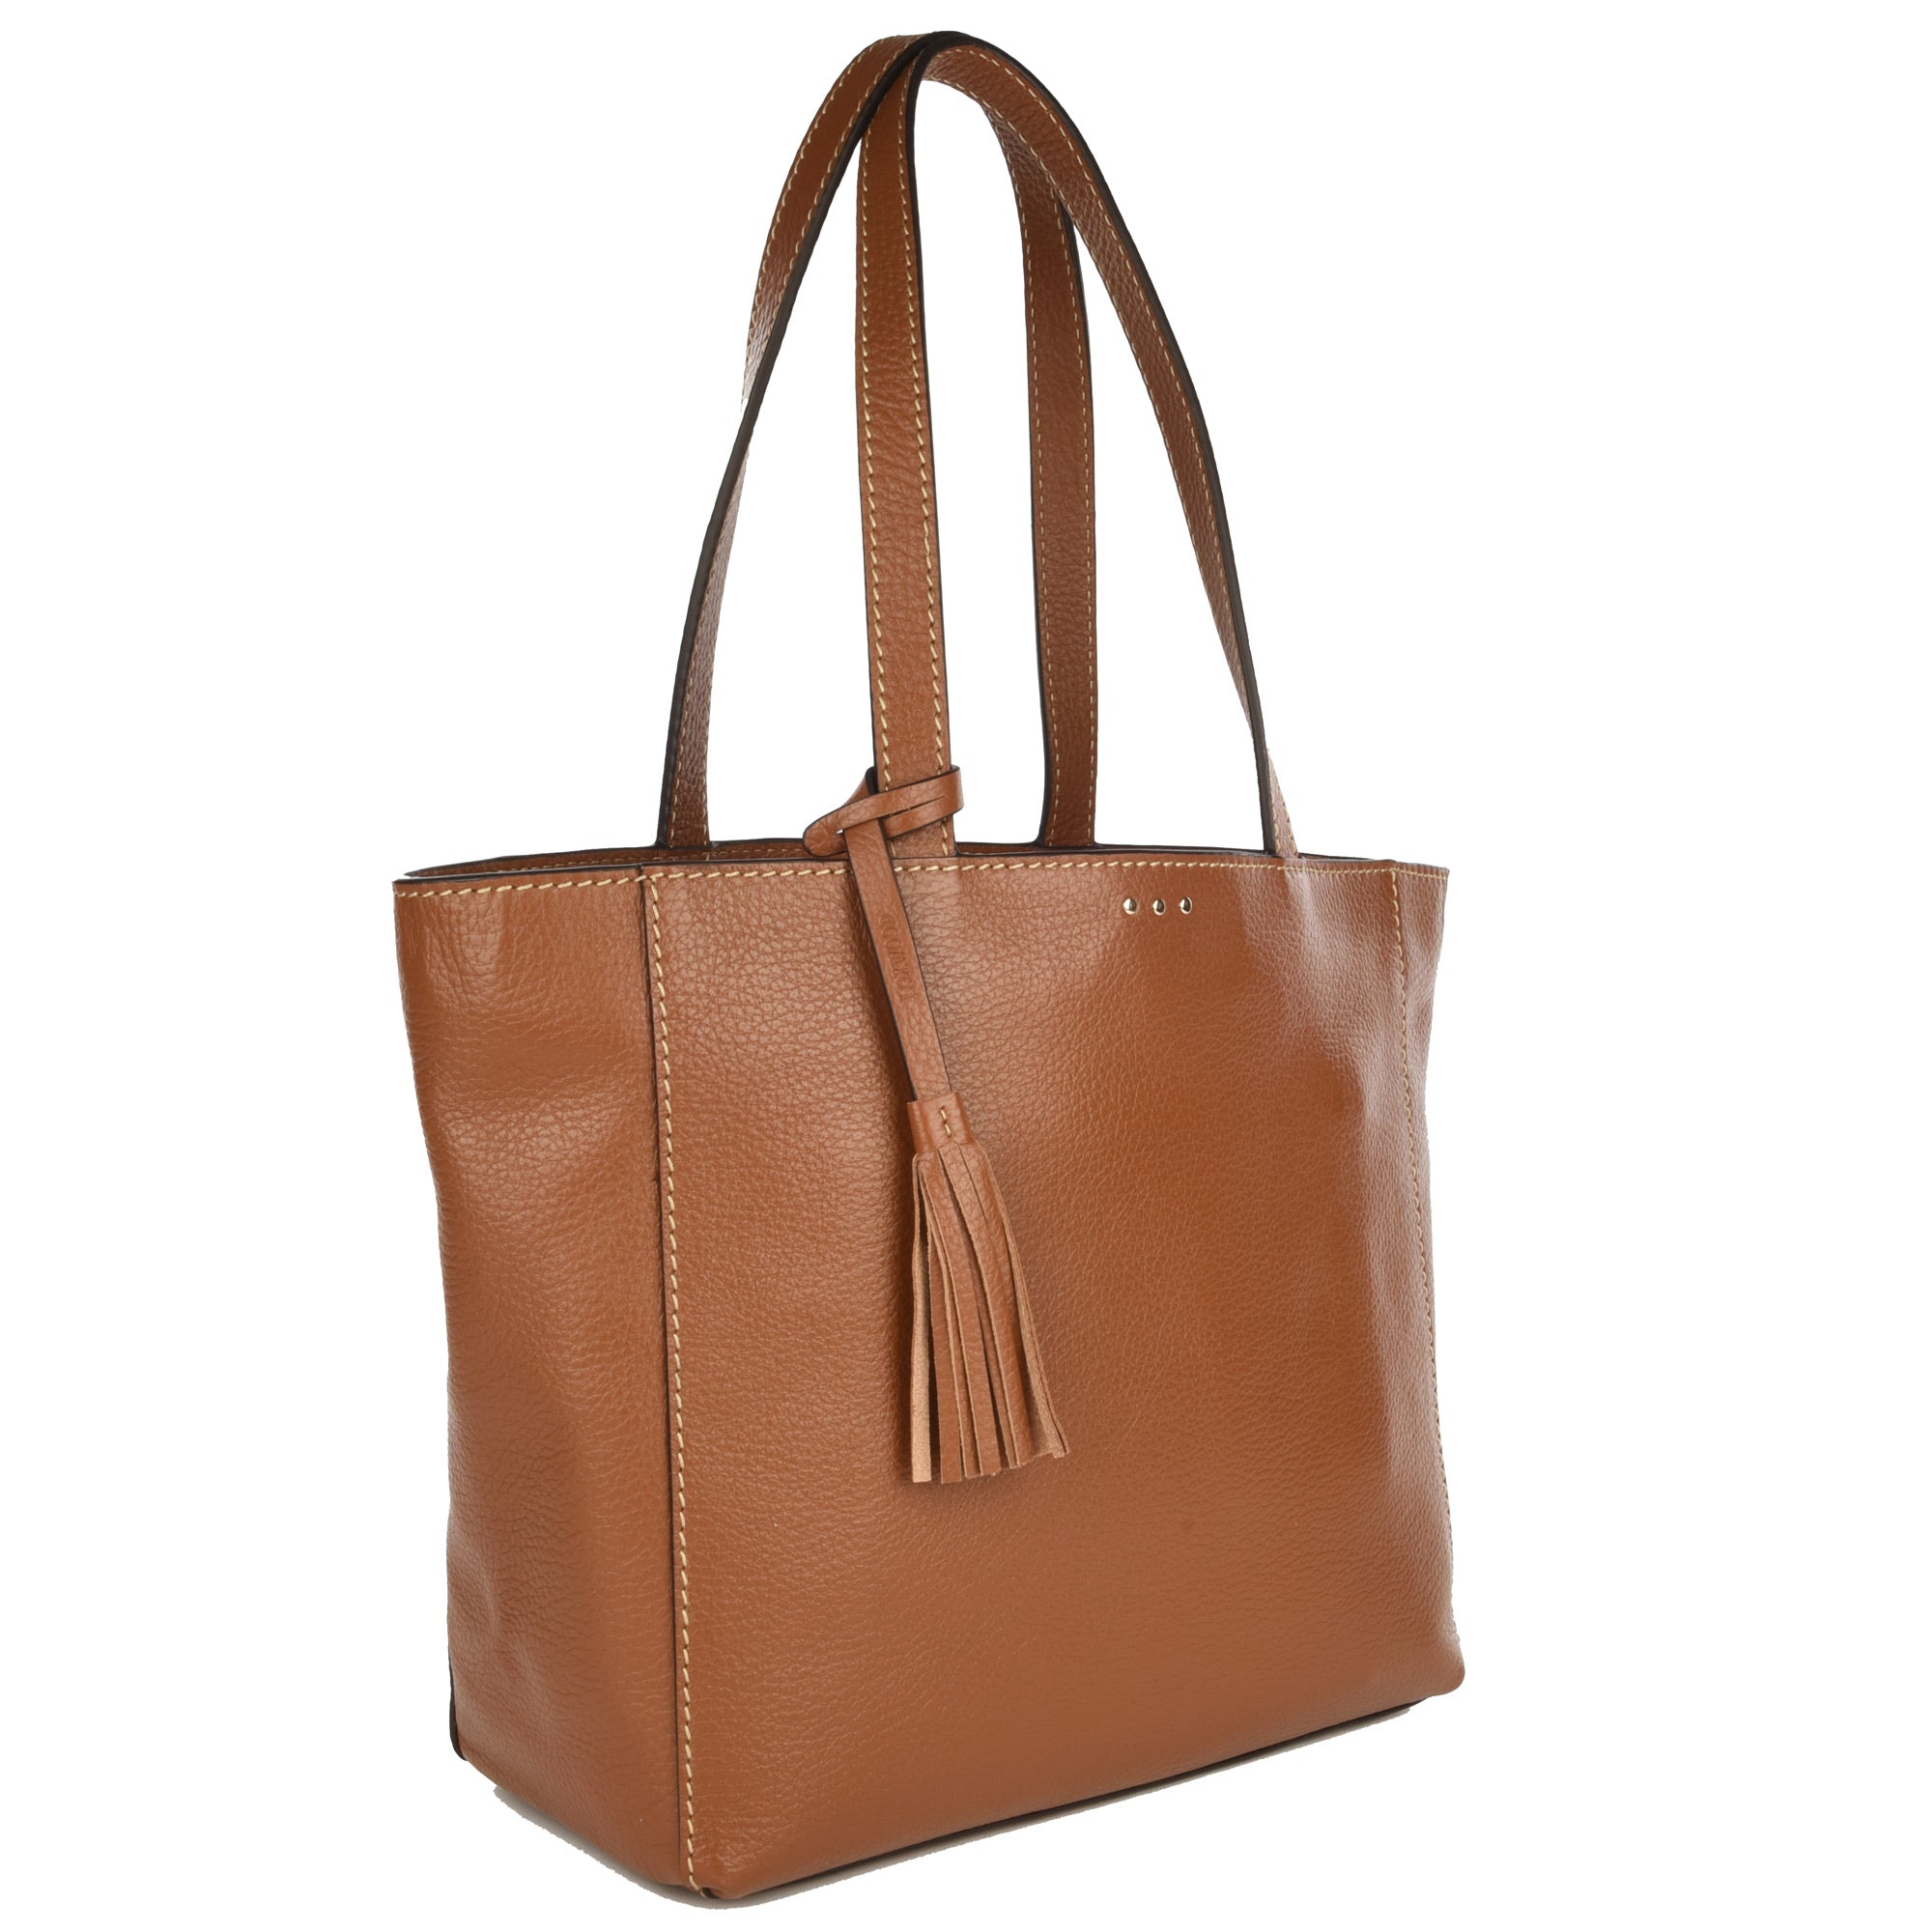 MONTMARTRE - Grained leather shoulder tote bag